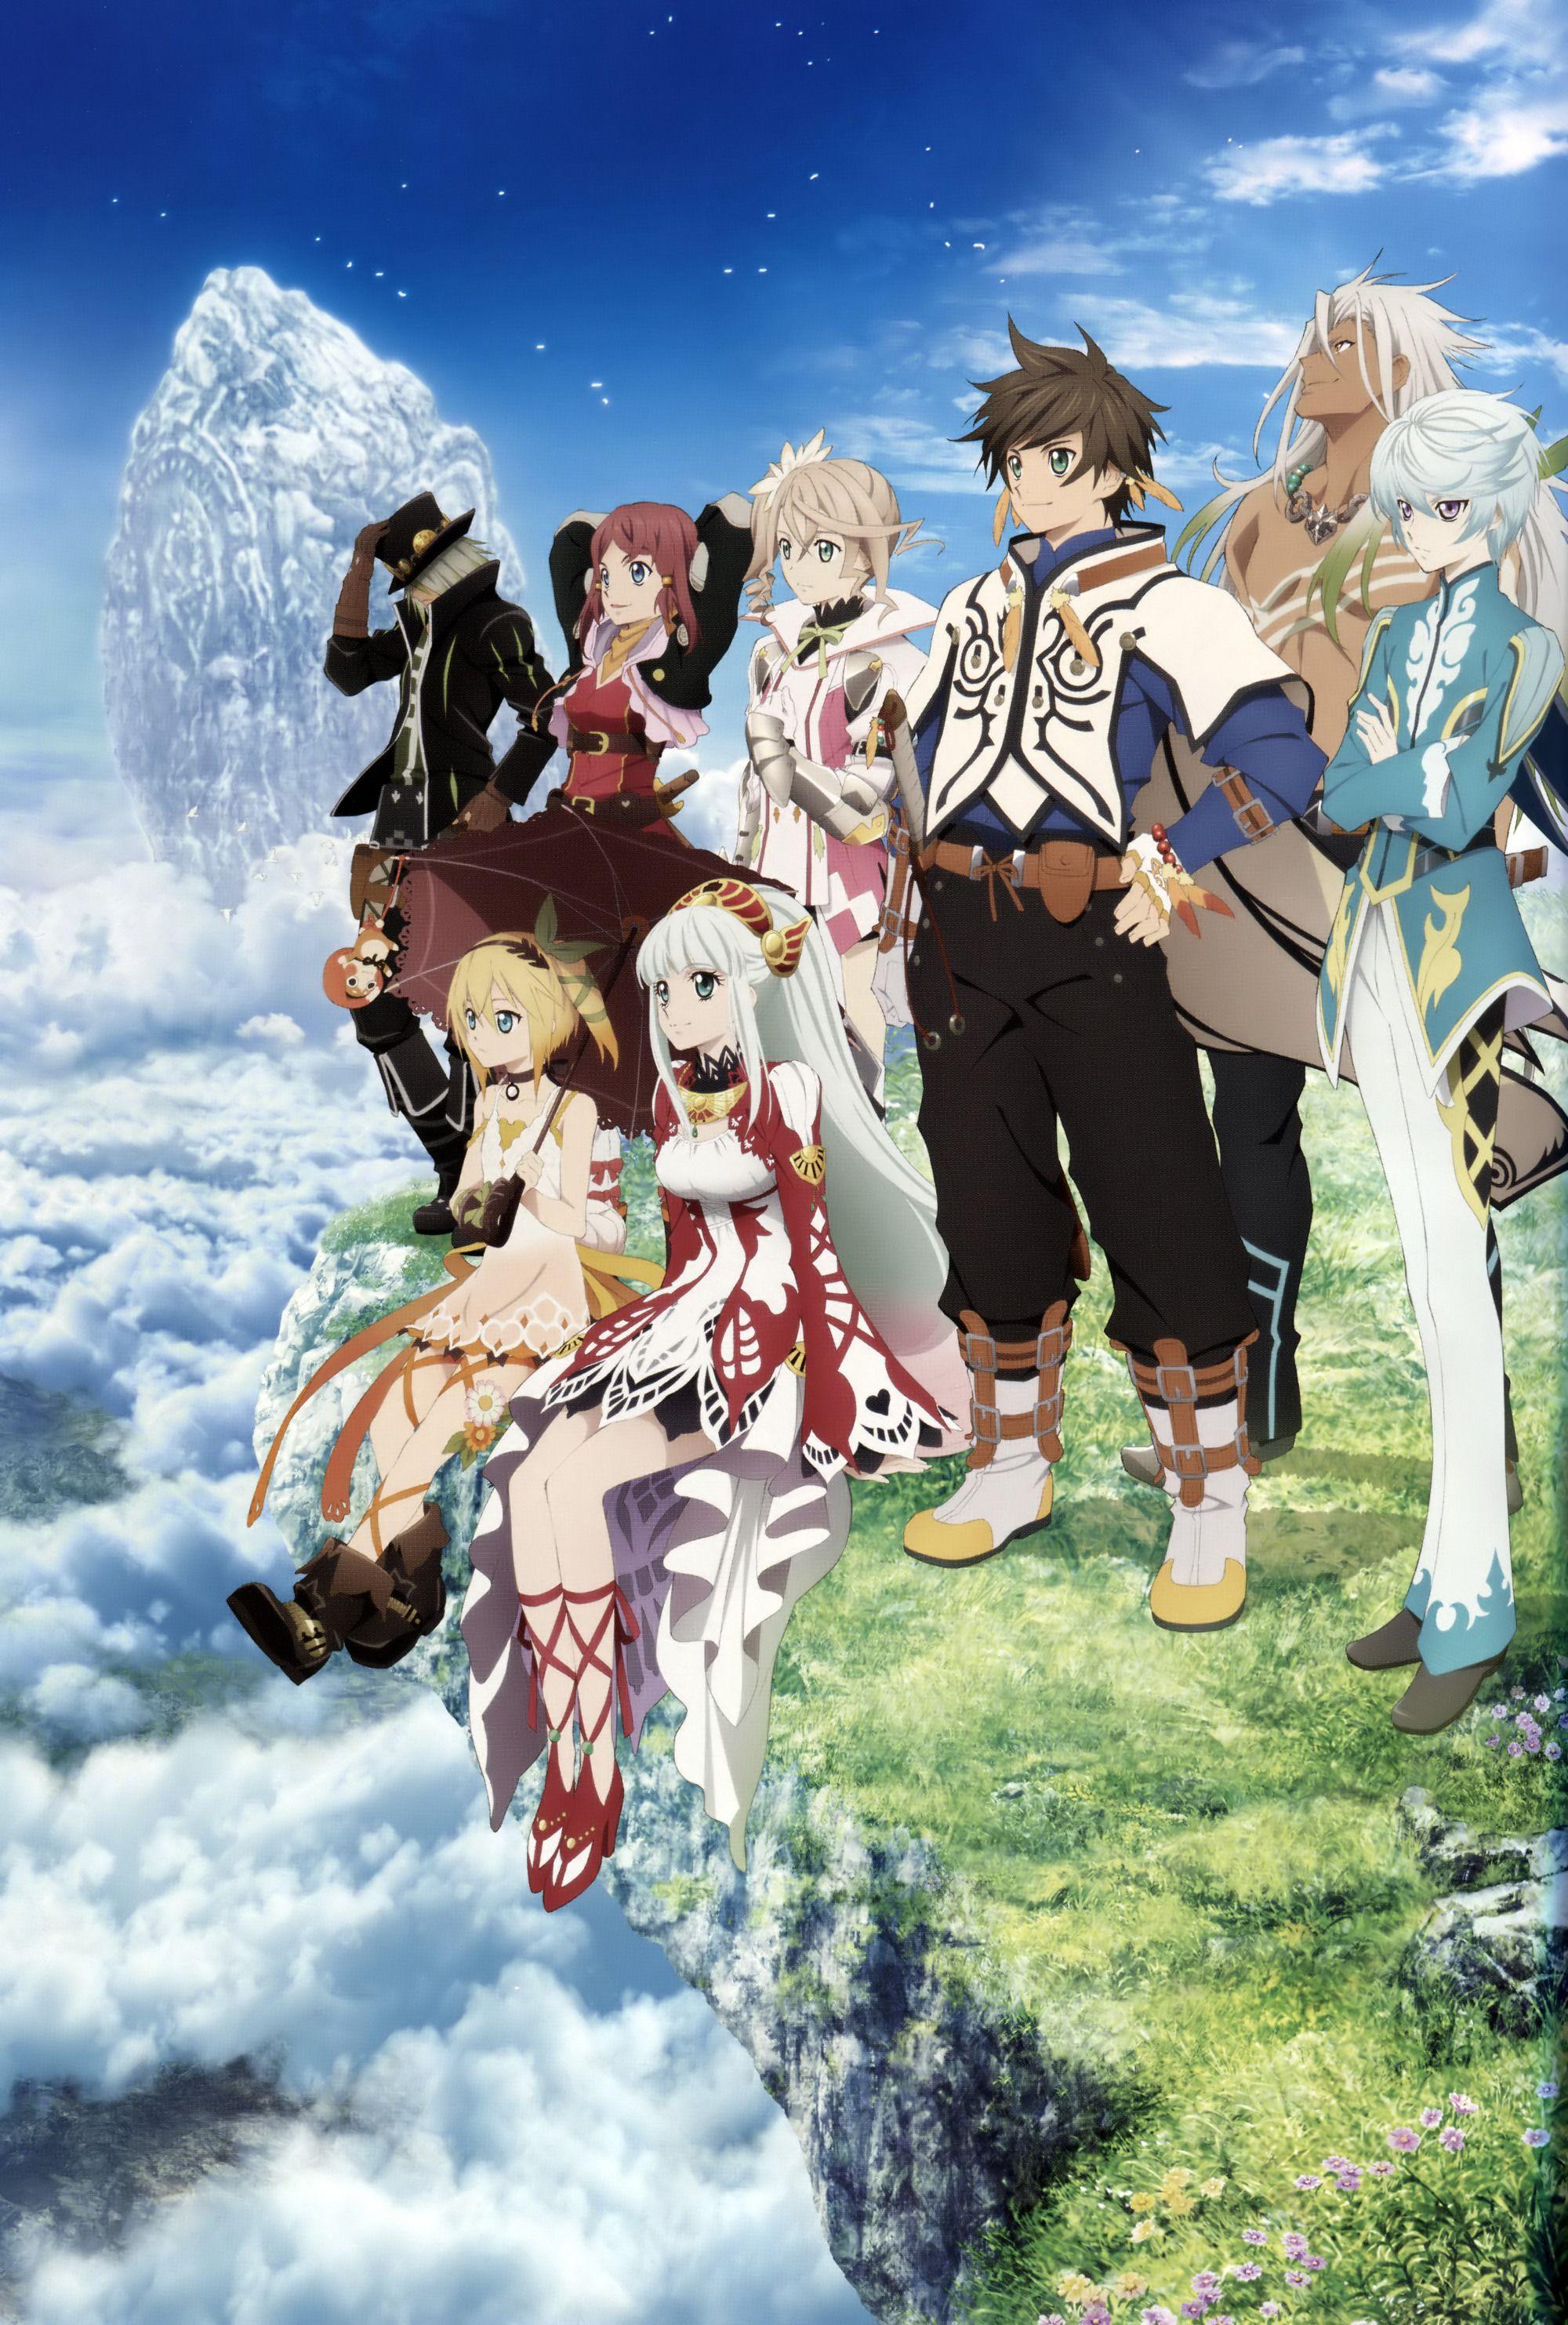 Tales of Zestiria Anime Image Board